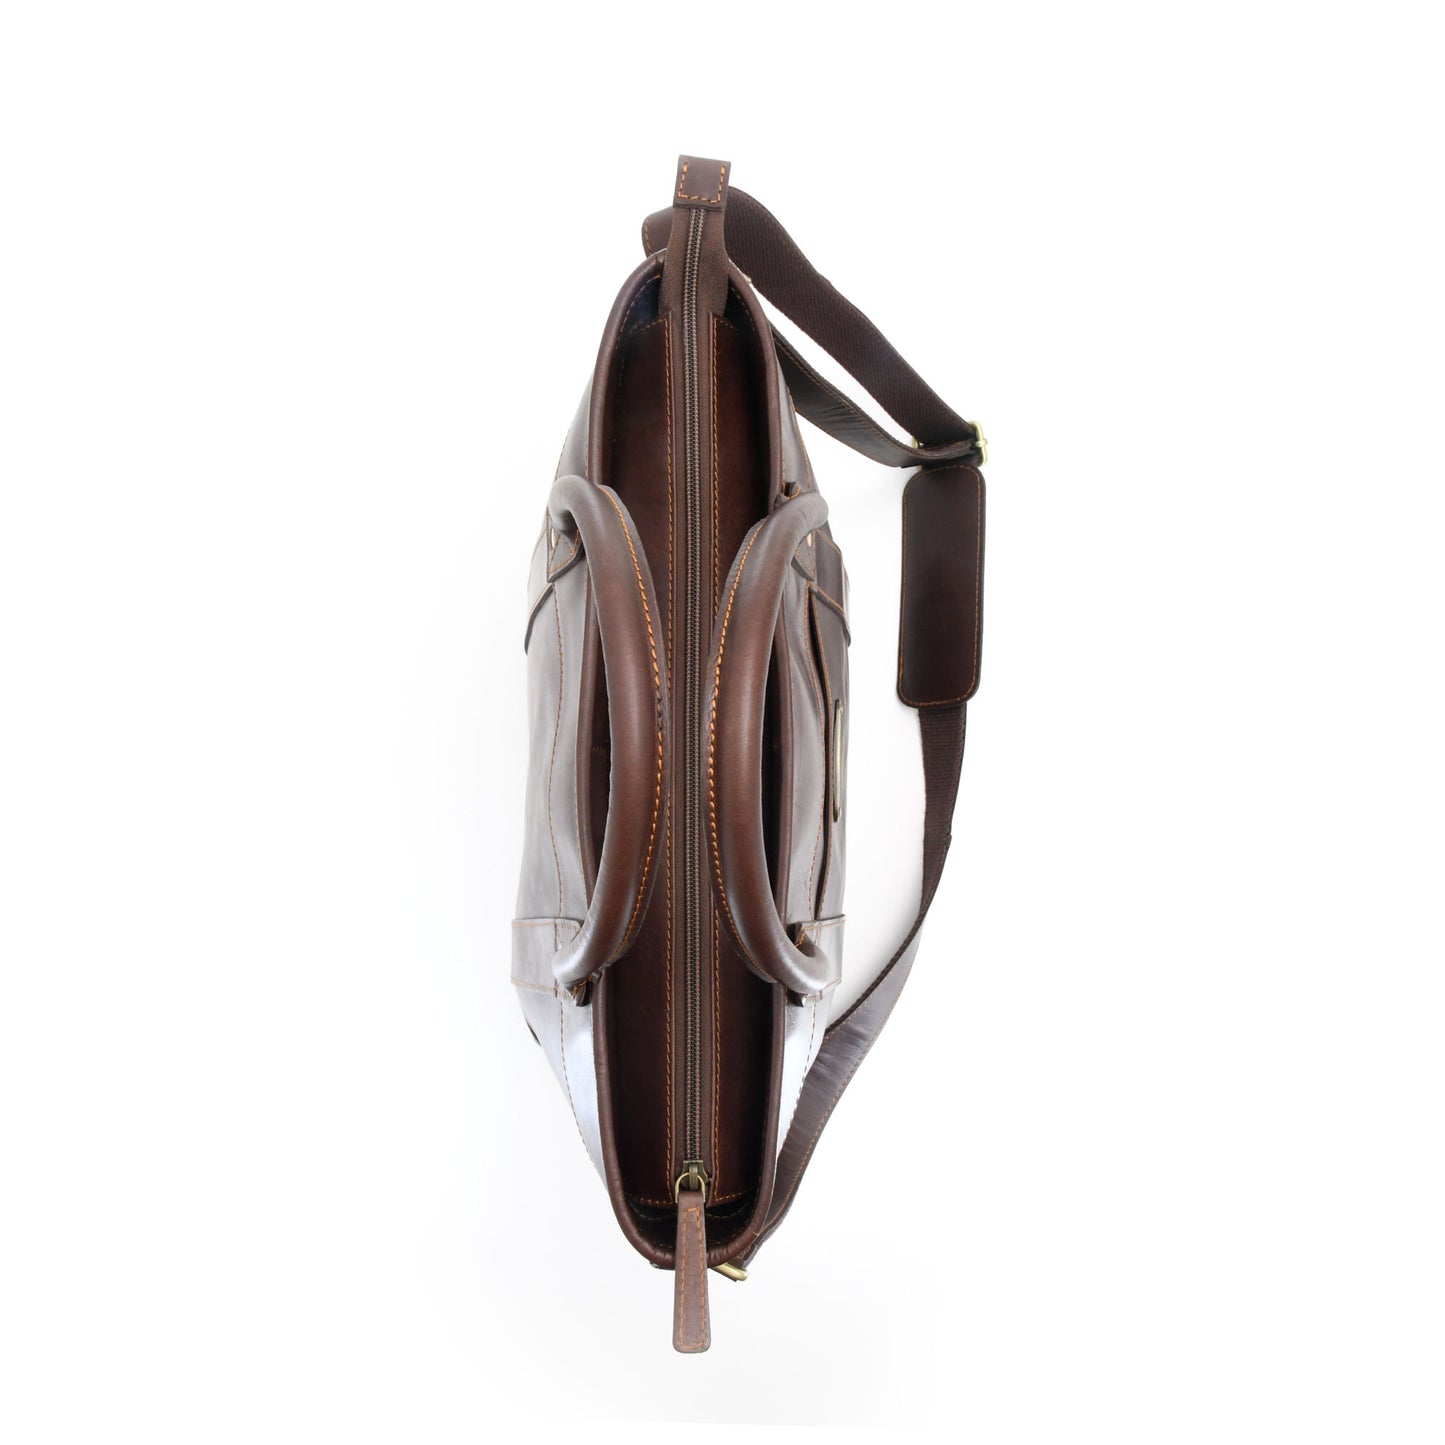 Style n Craft 392003 Men's Tote Bag in Full Grain Dark Brown Leather - Top View Showing the Zipper Closure of the Bag - Vertical